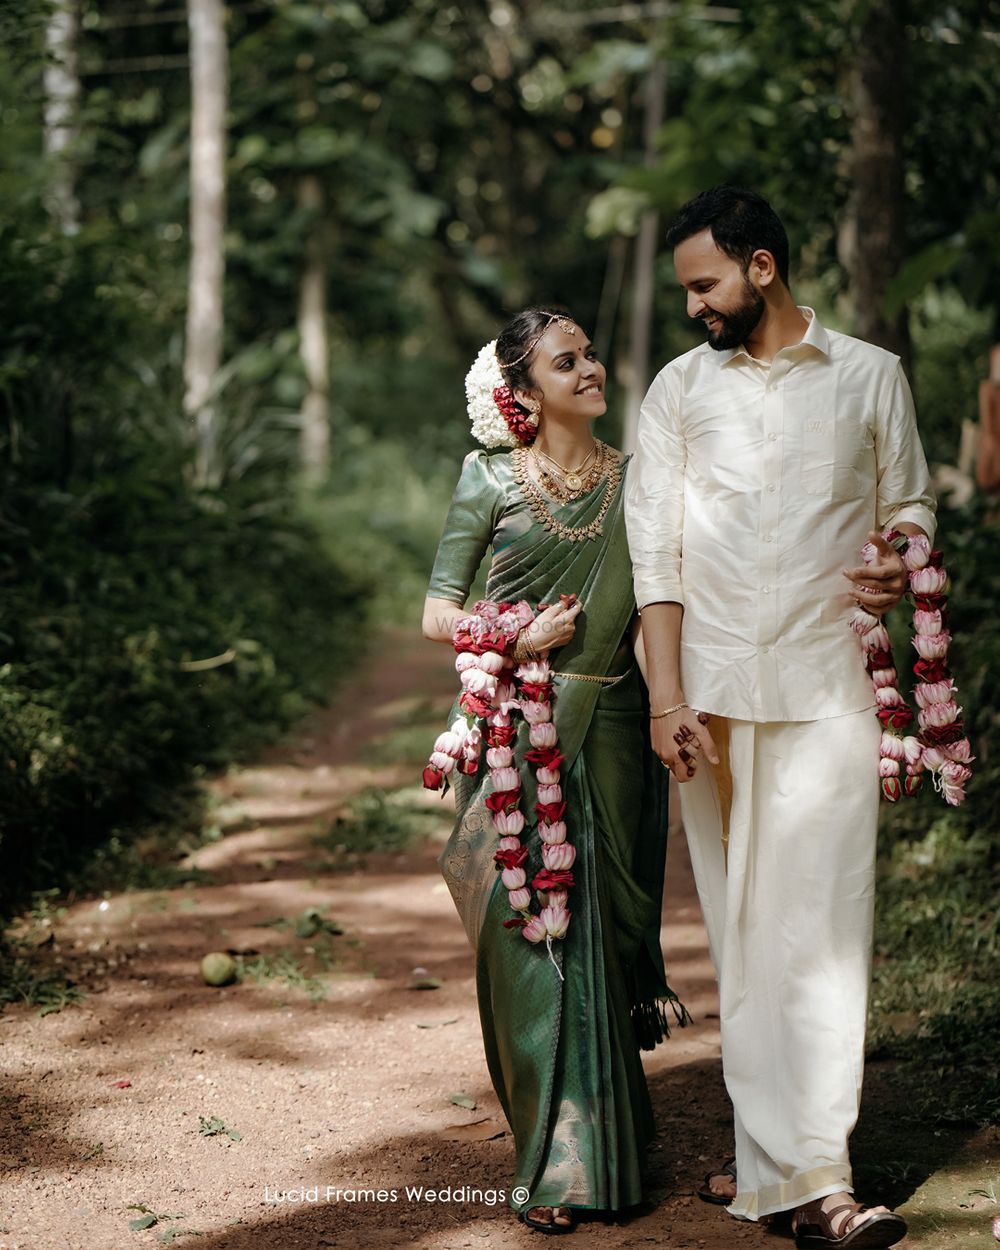 Photo From Brahmin wedding - By Lucid Frames Weddings